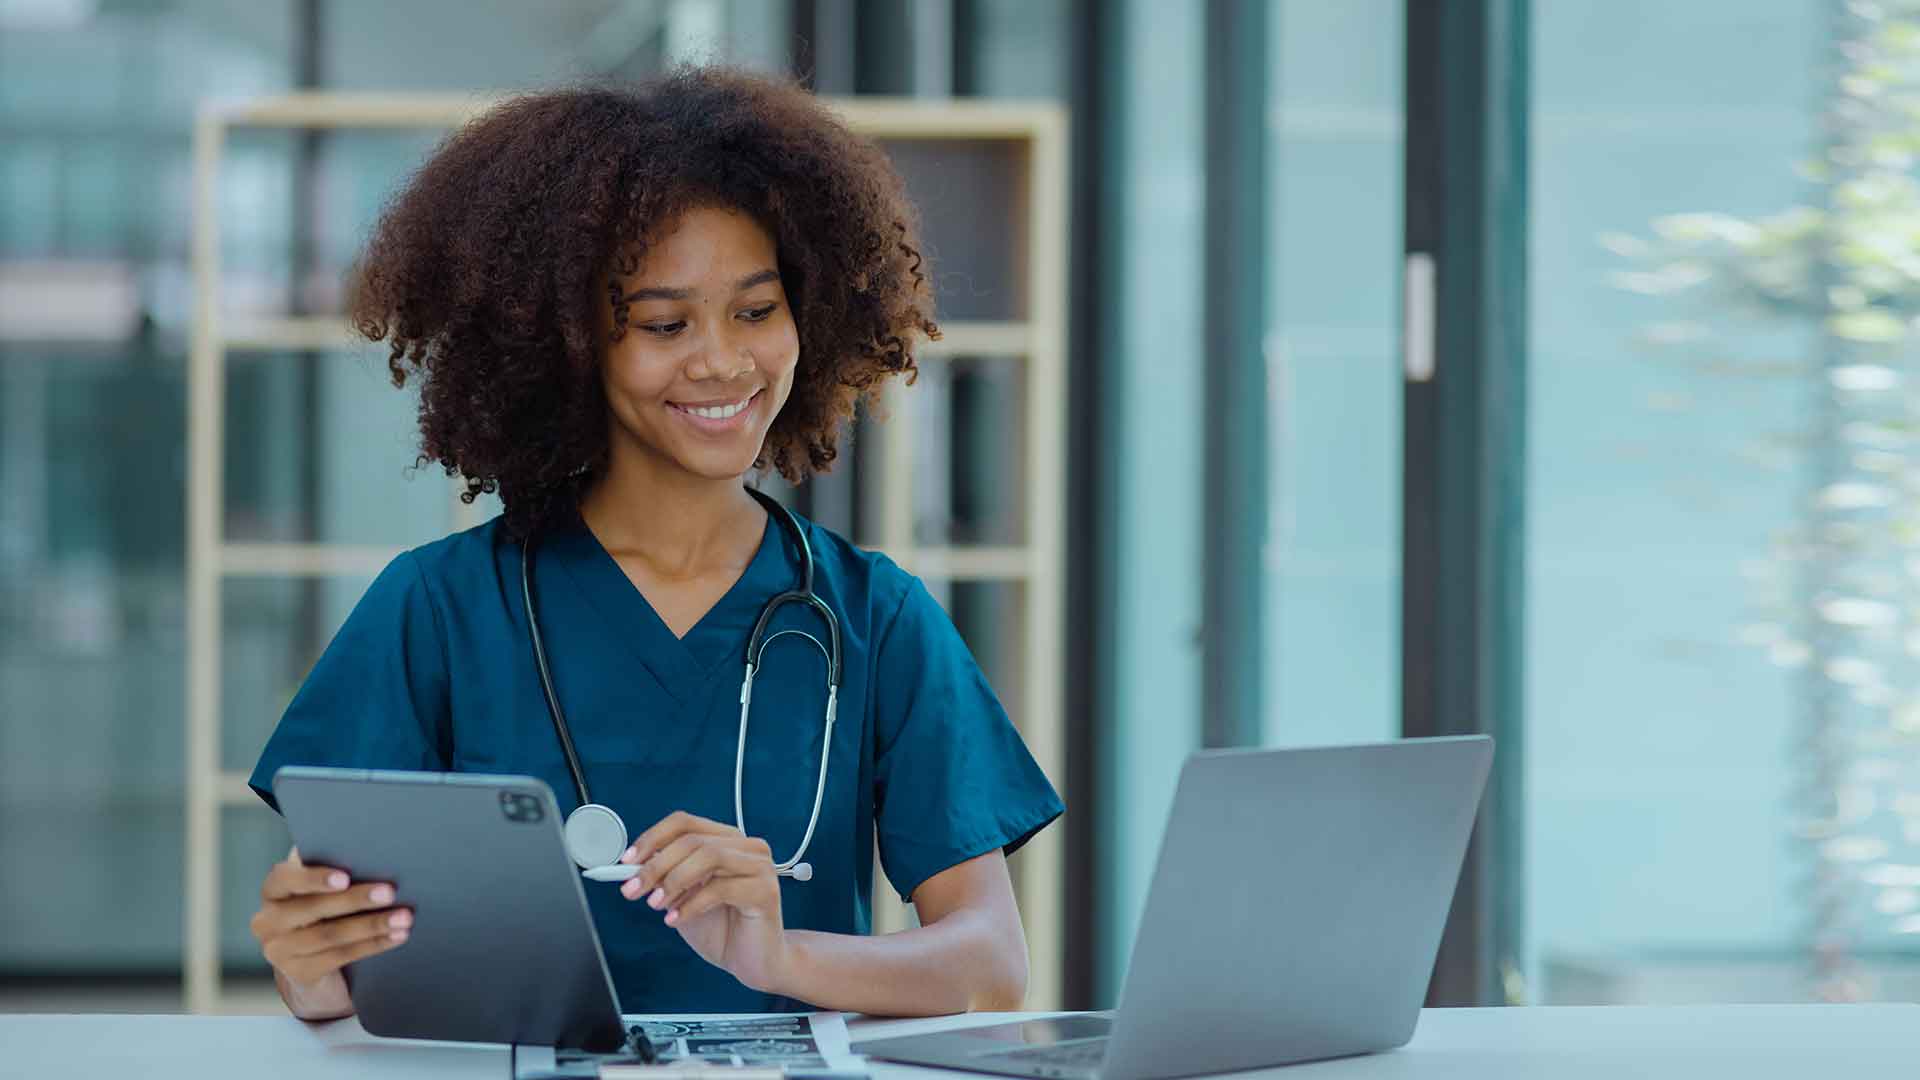 health information management technician transfers patient info to laptop